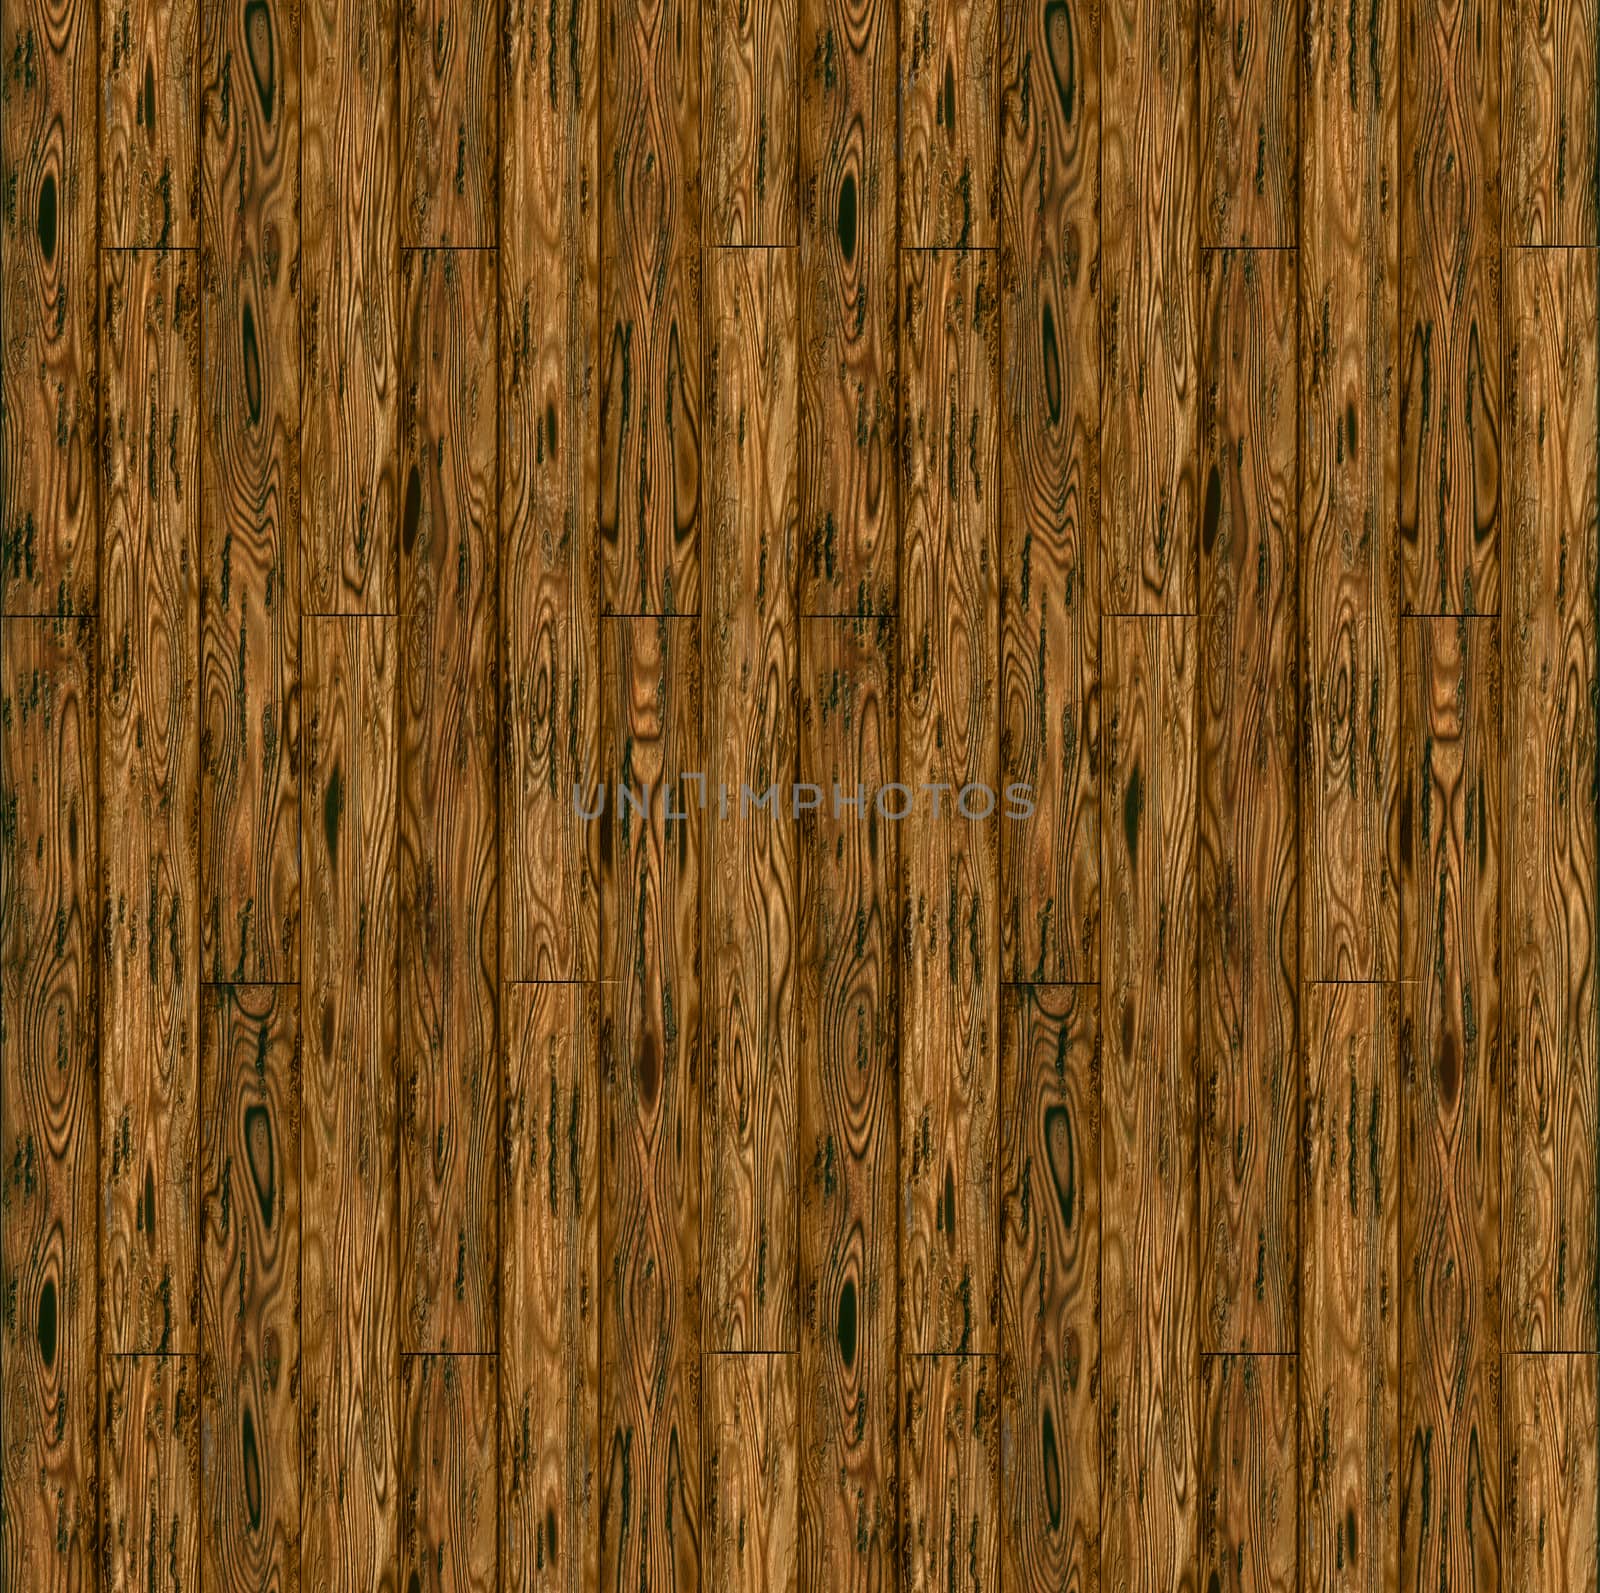 Digital illustration of a rustic wood floor.